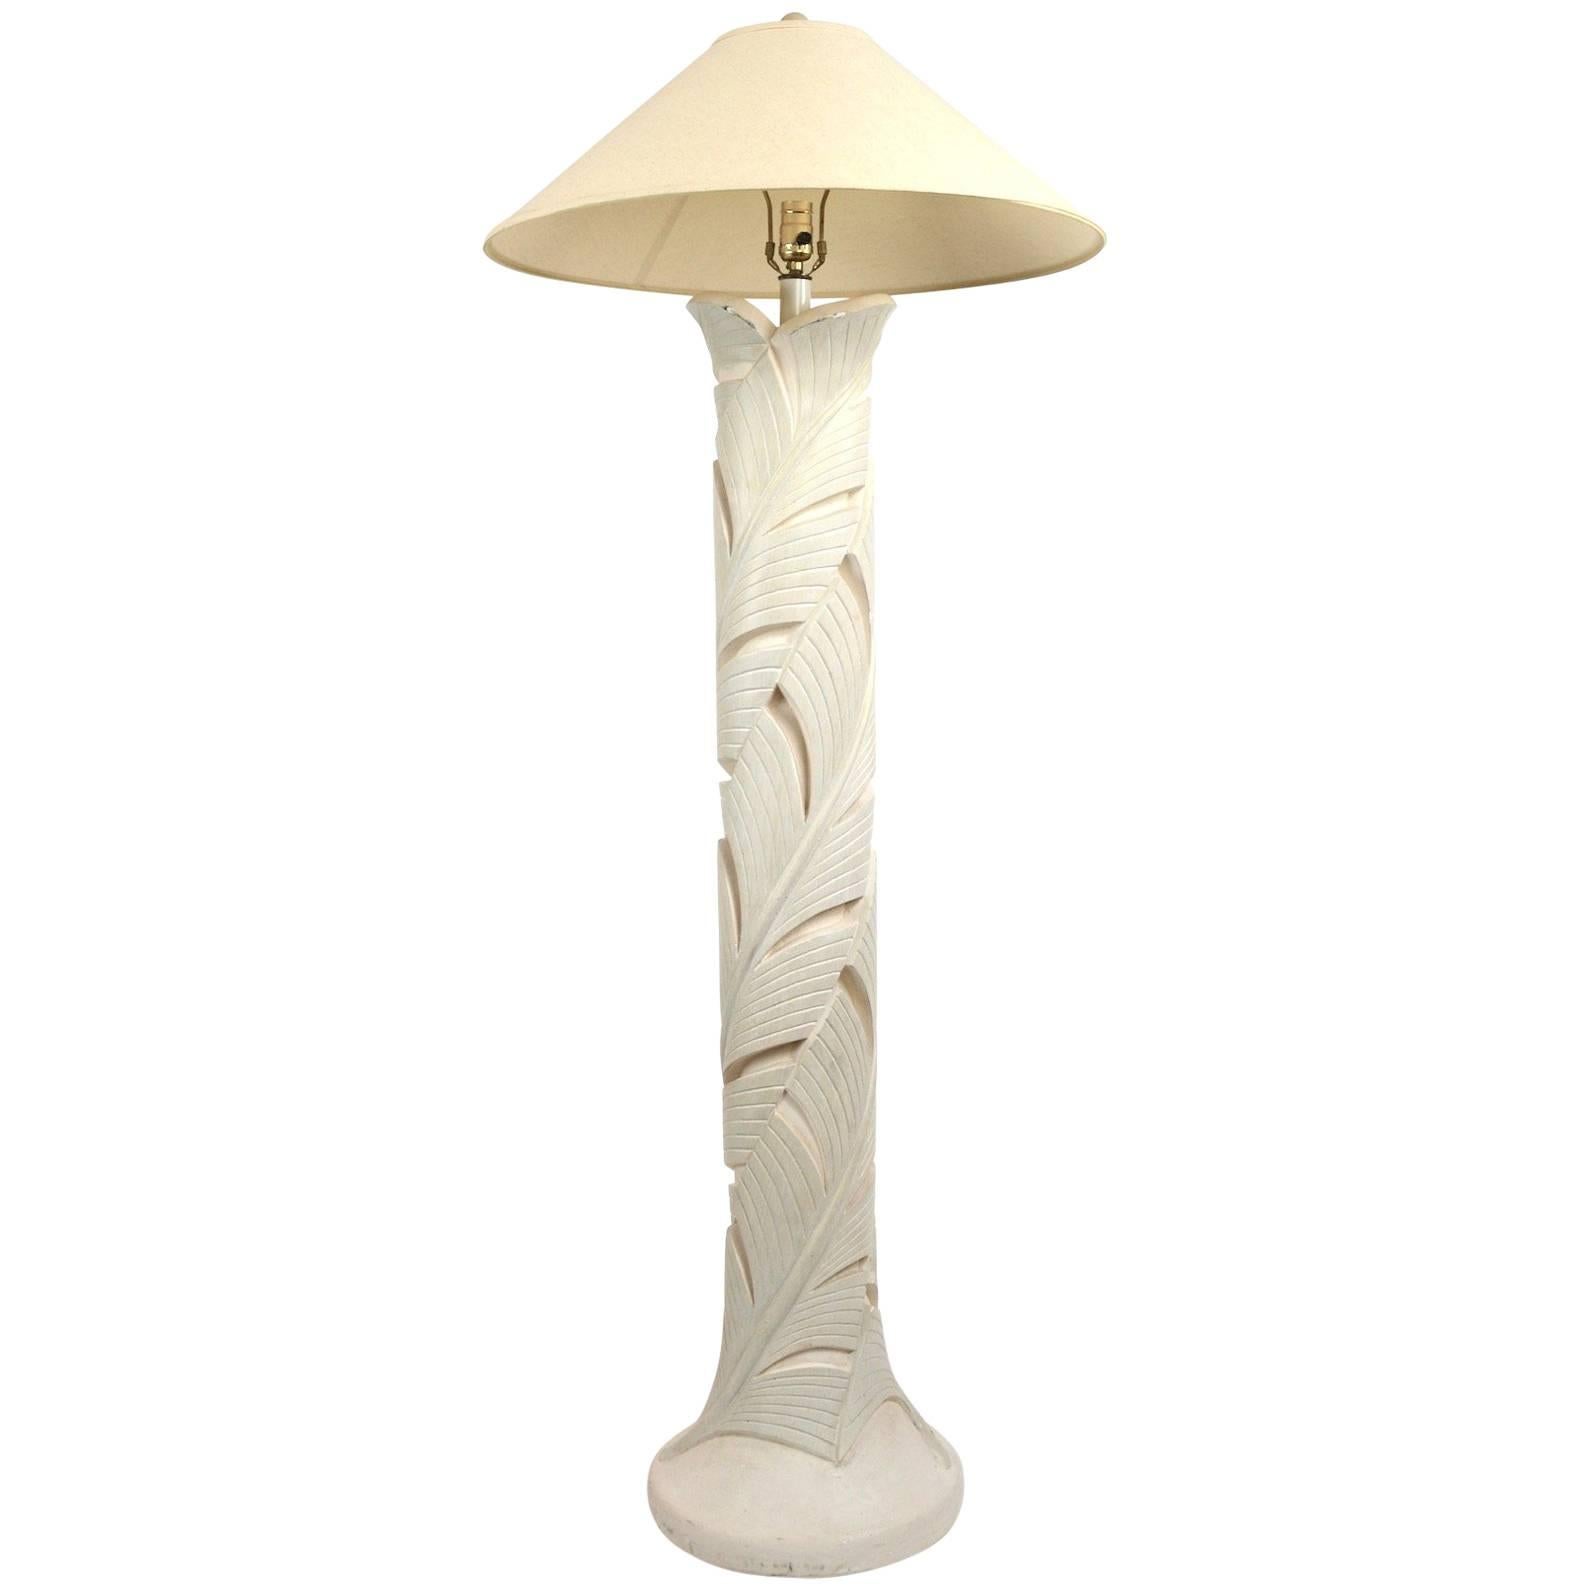 Plaster Floor Lamp in Foliate Motif